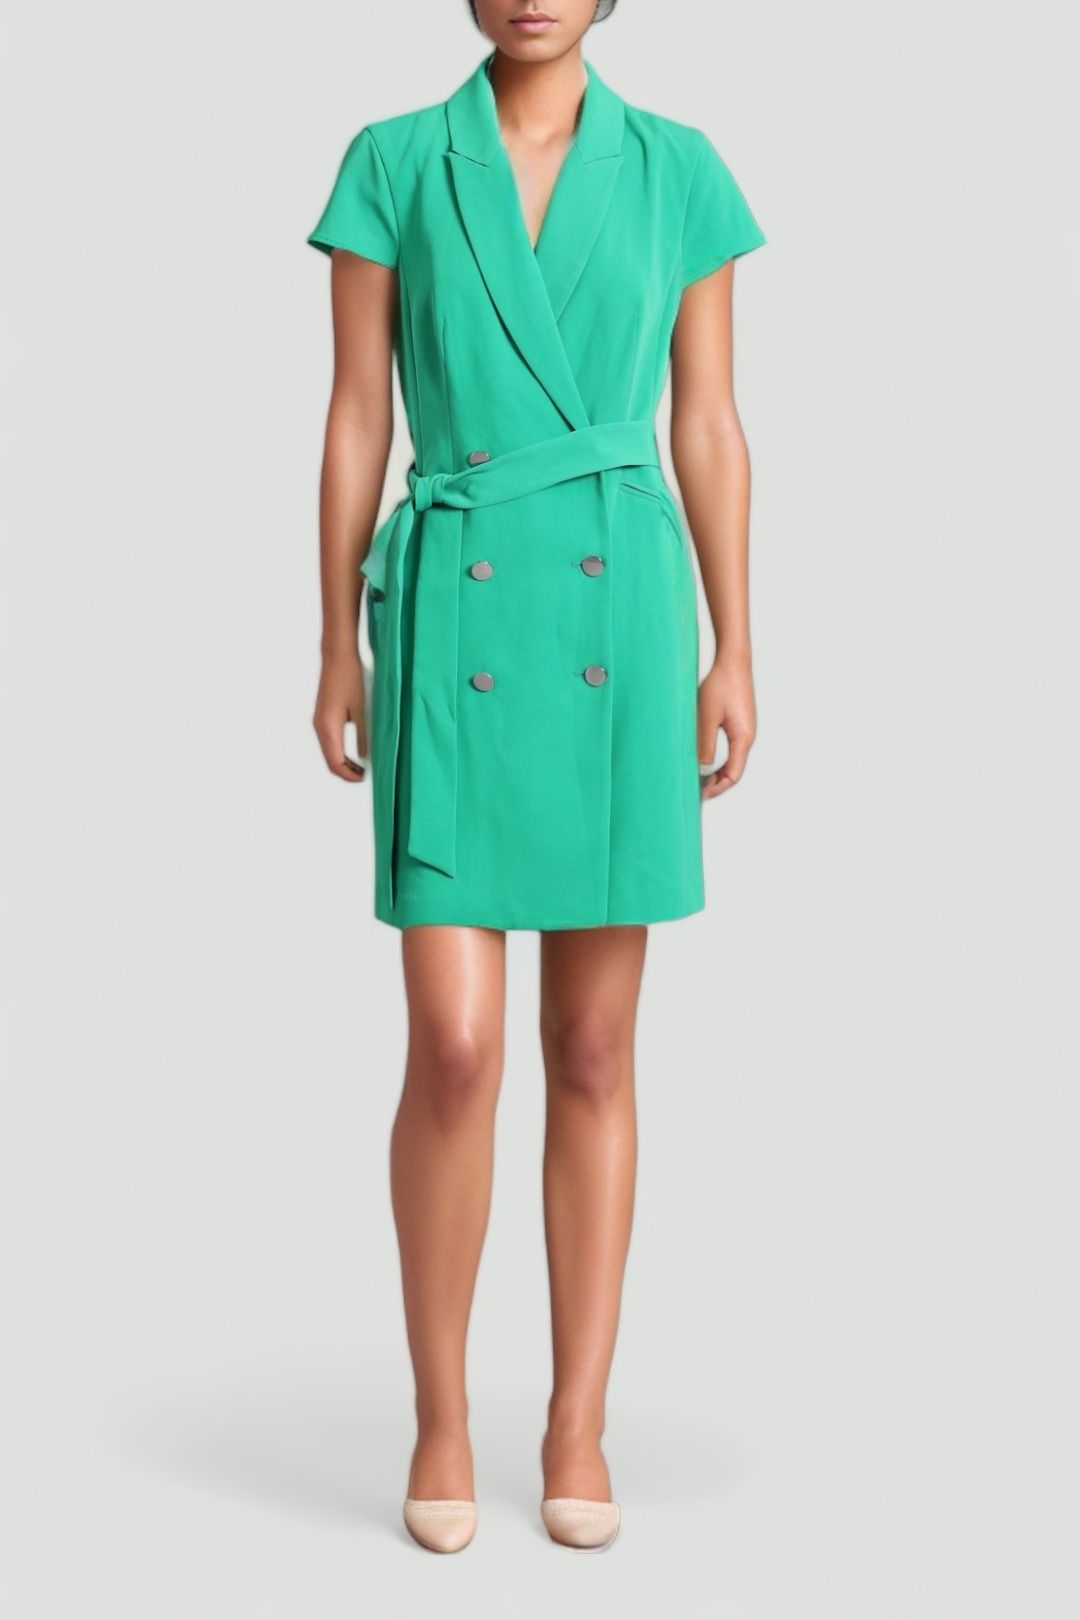 Portmans - Georgie Cap Sleeve Dress Green